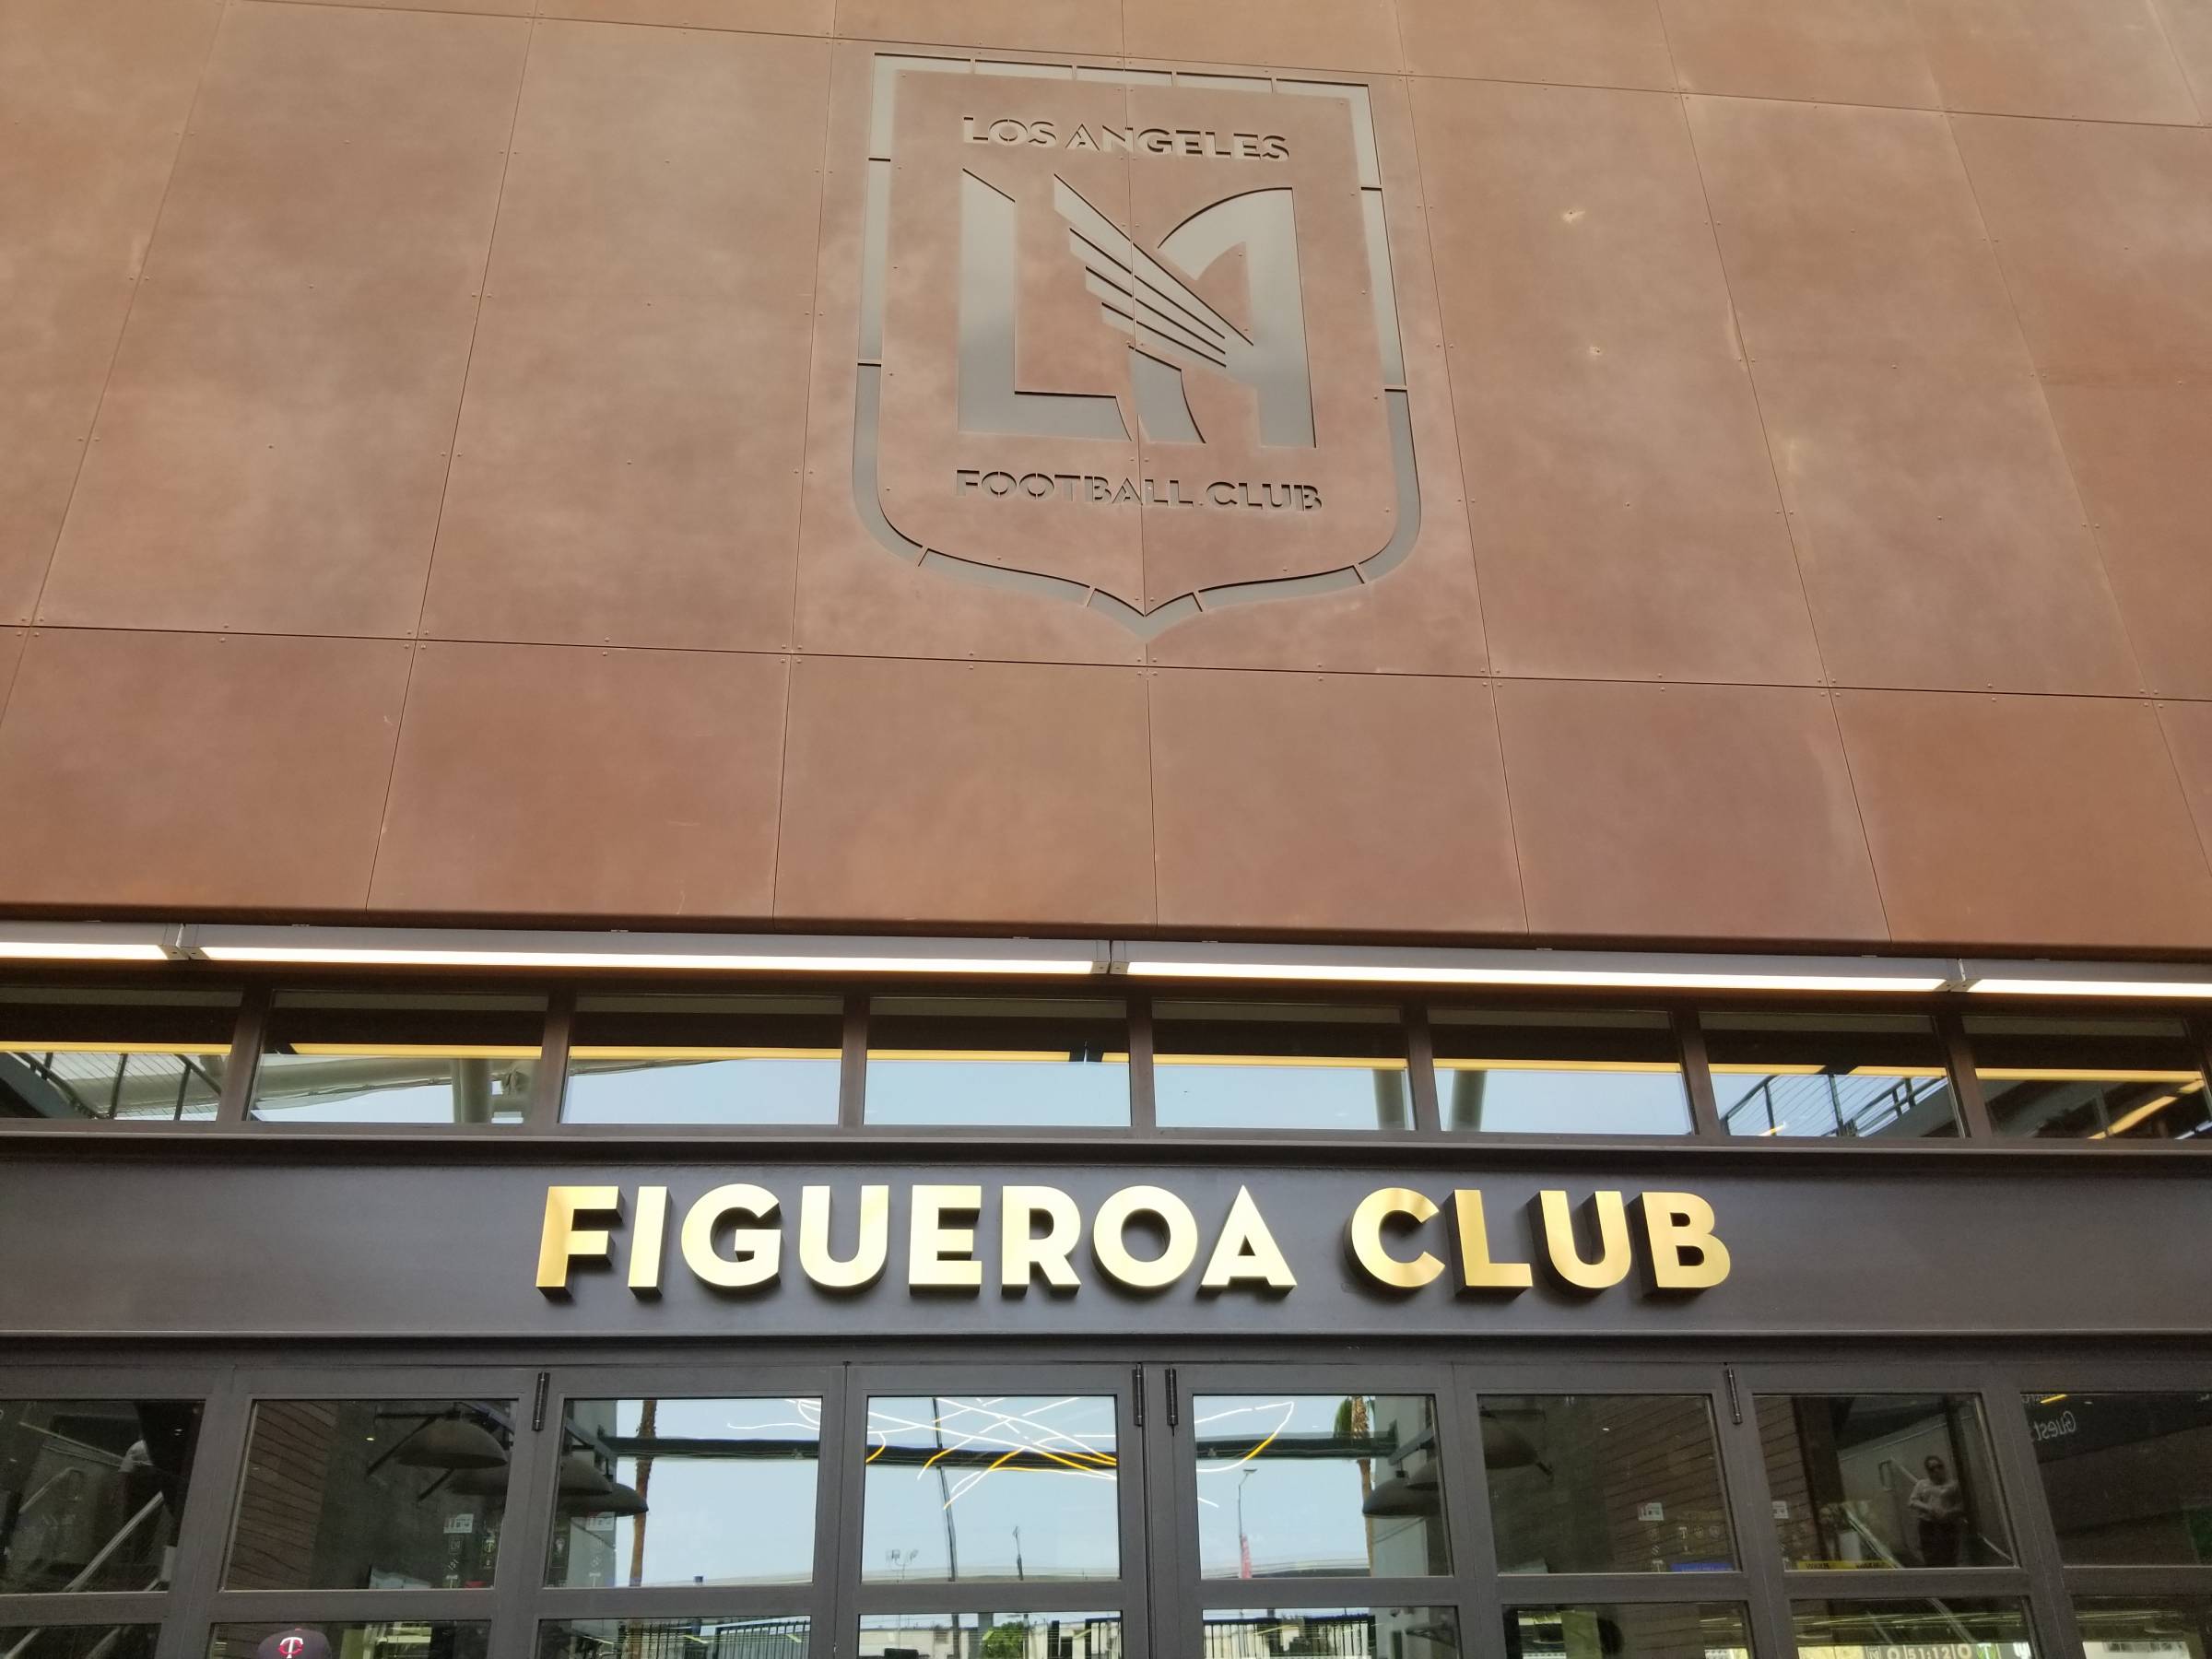 Signage of the Figueroa Club